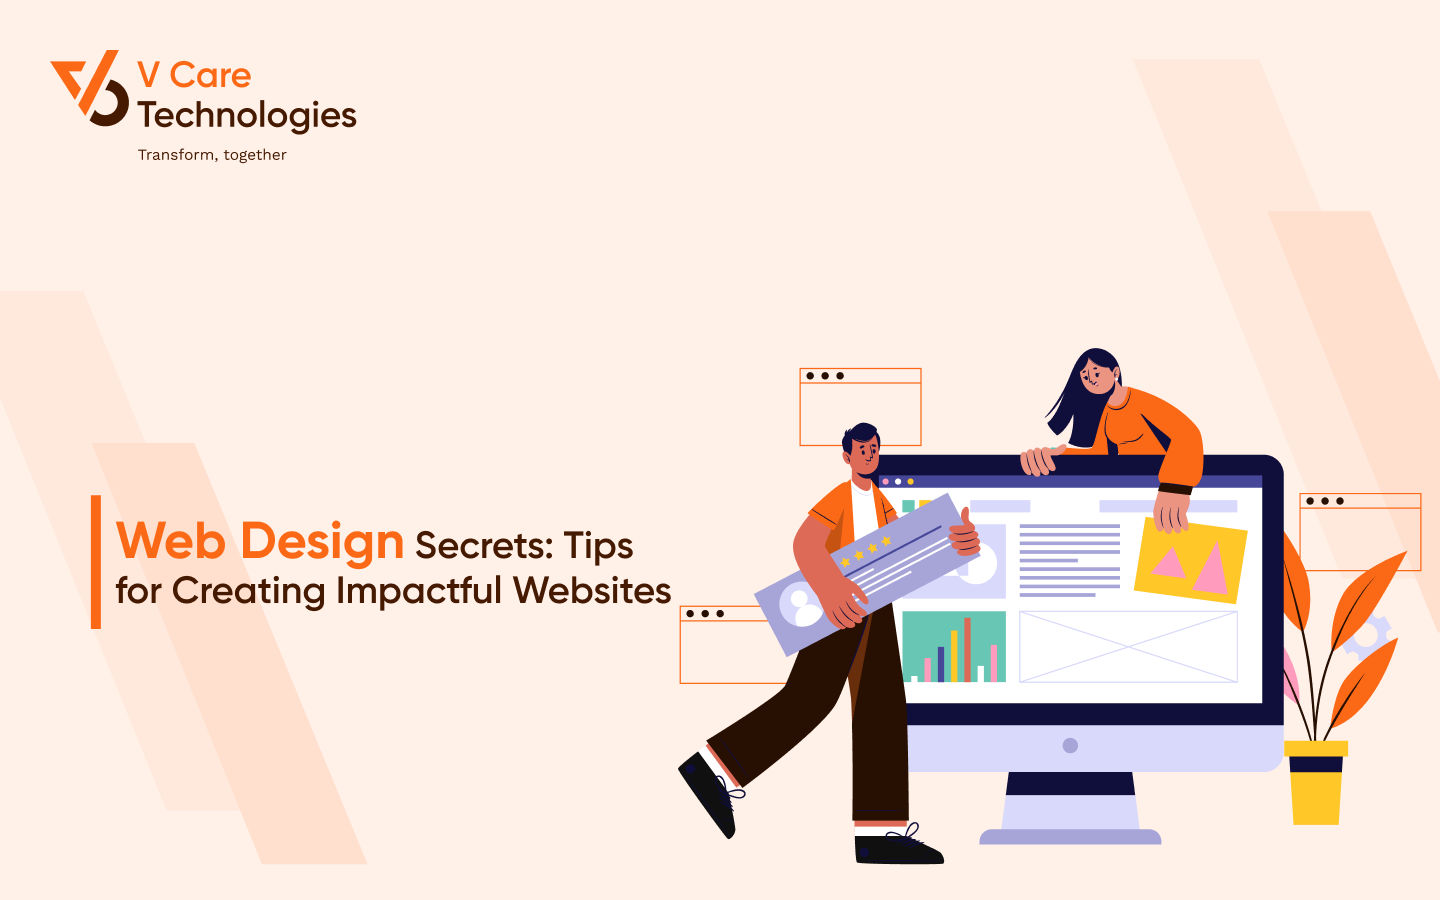 Web Design Secrets: Tips for Creating Impactful Websites
